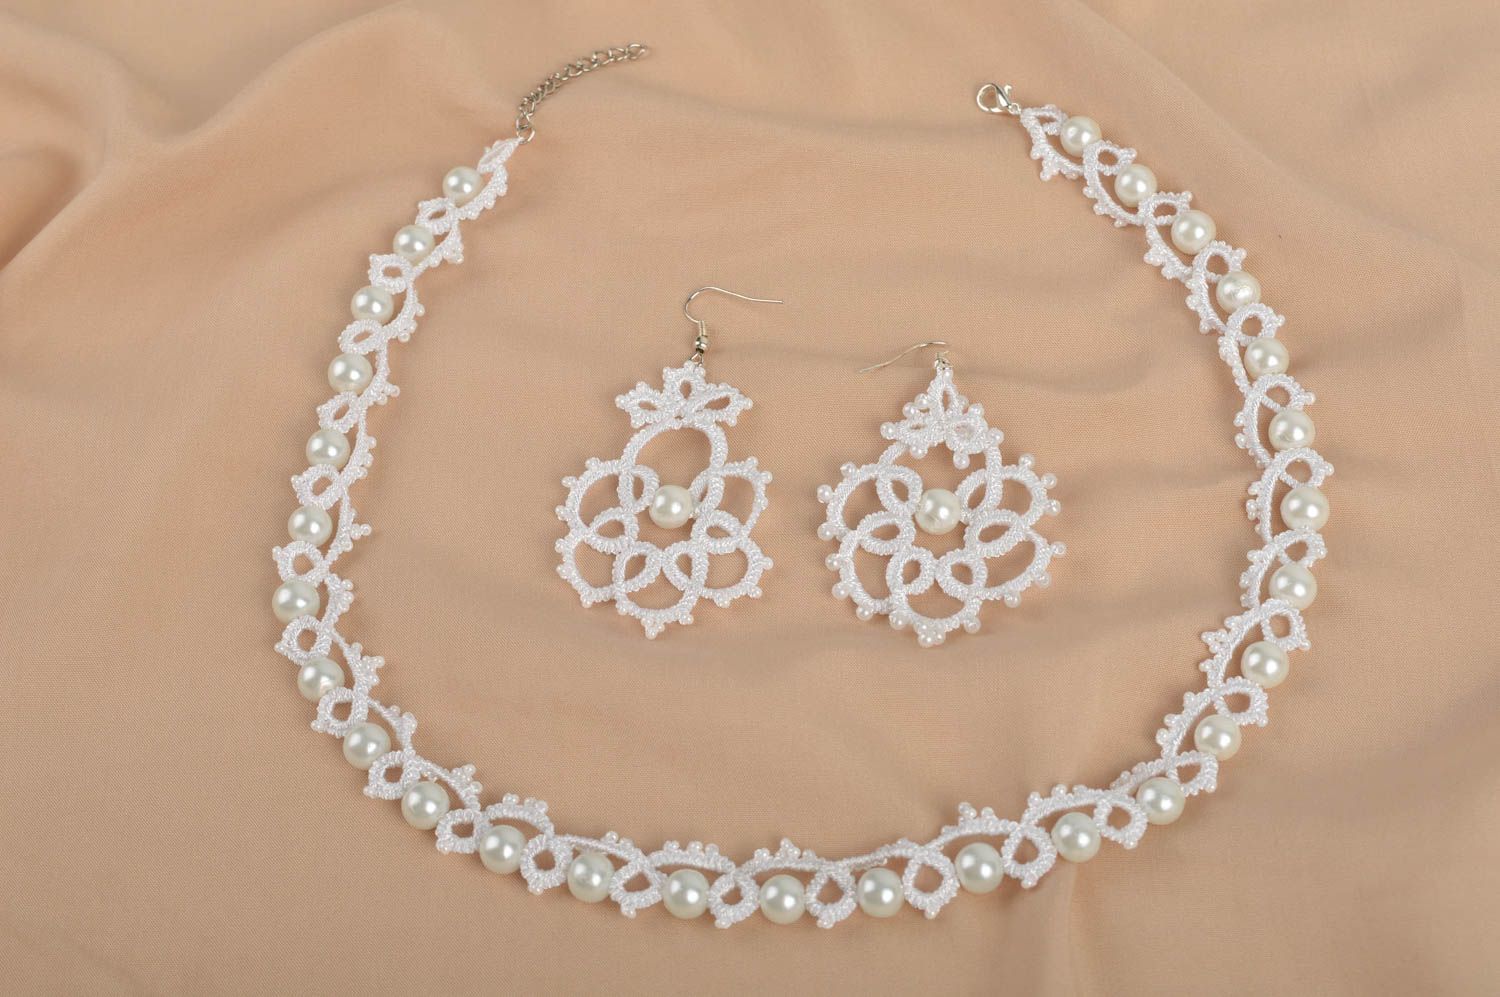 Beautiful handmade textile jewelry necklace and earrings tatting jewelry set photo 1